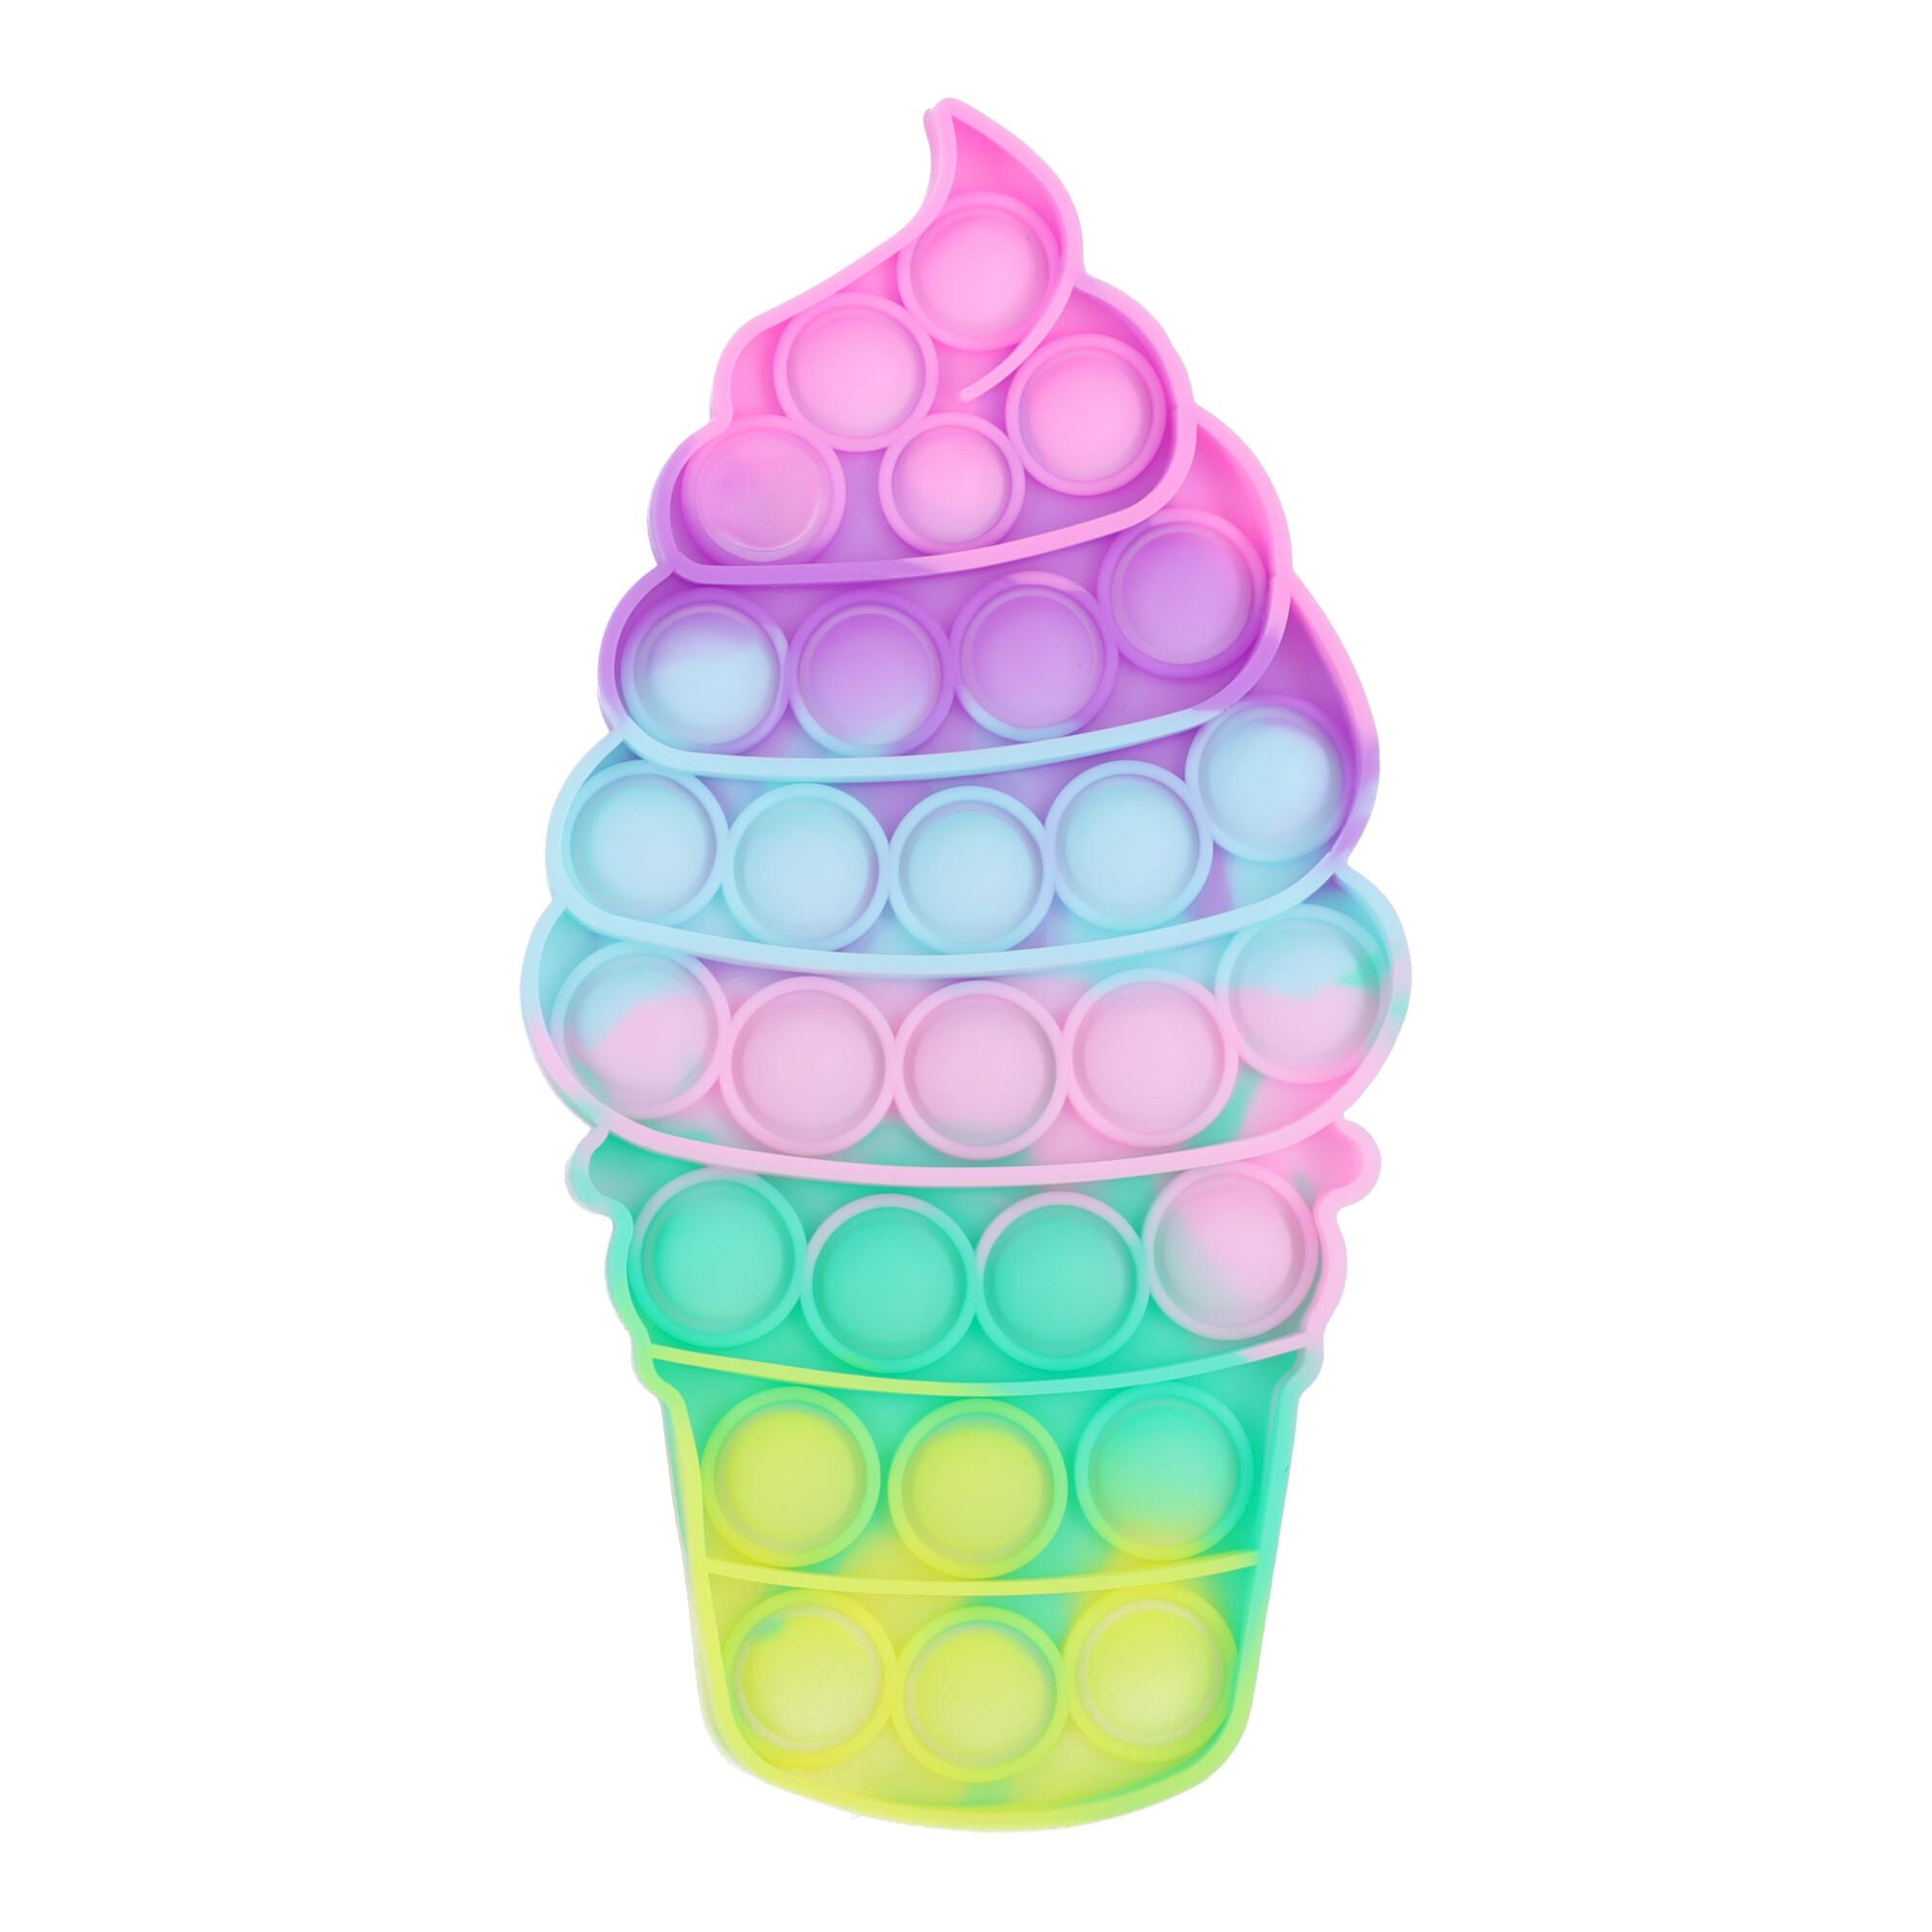 Anti-stress sensory toy in the shape of ice cream